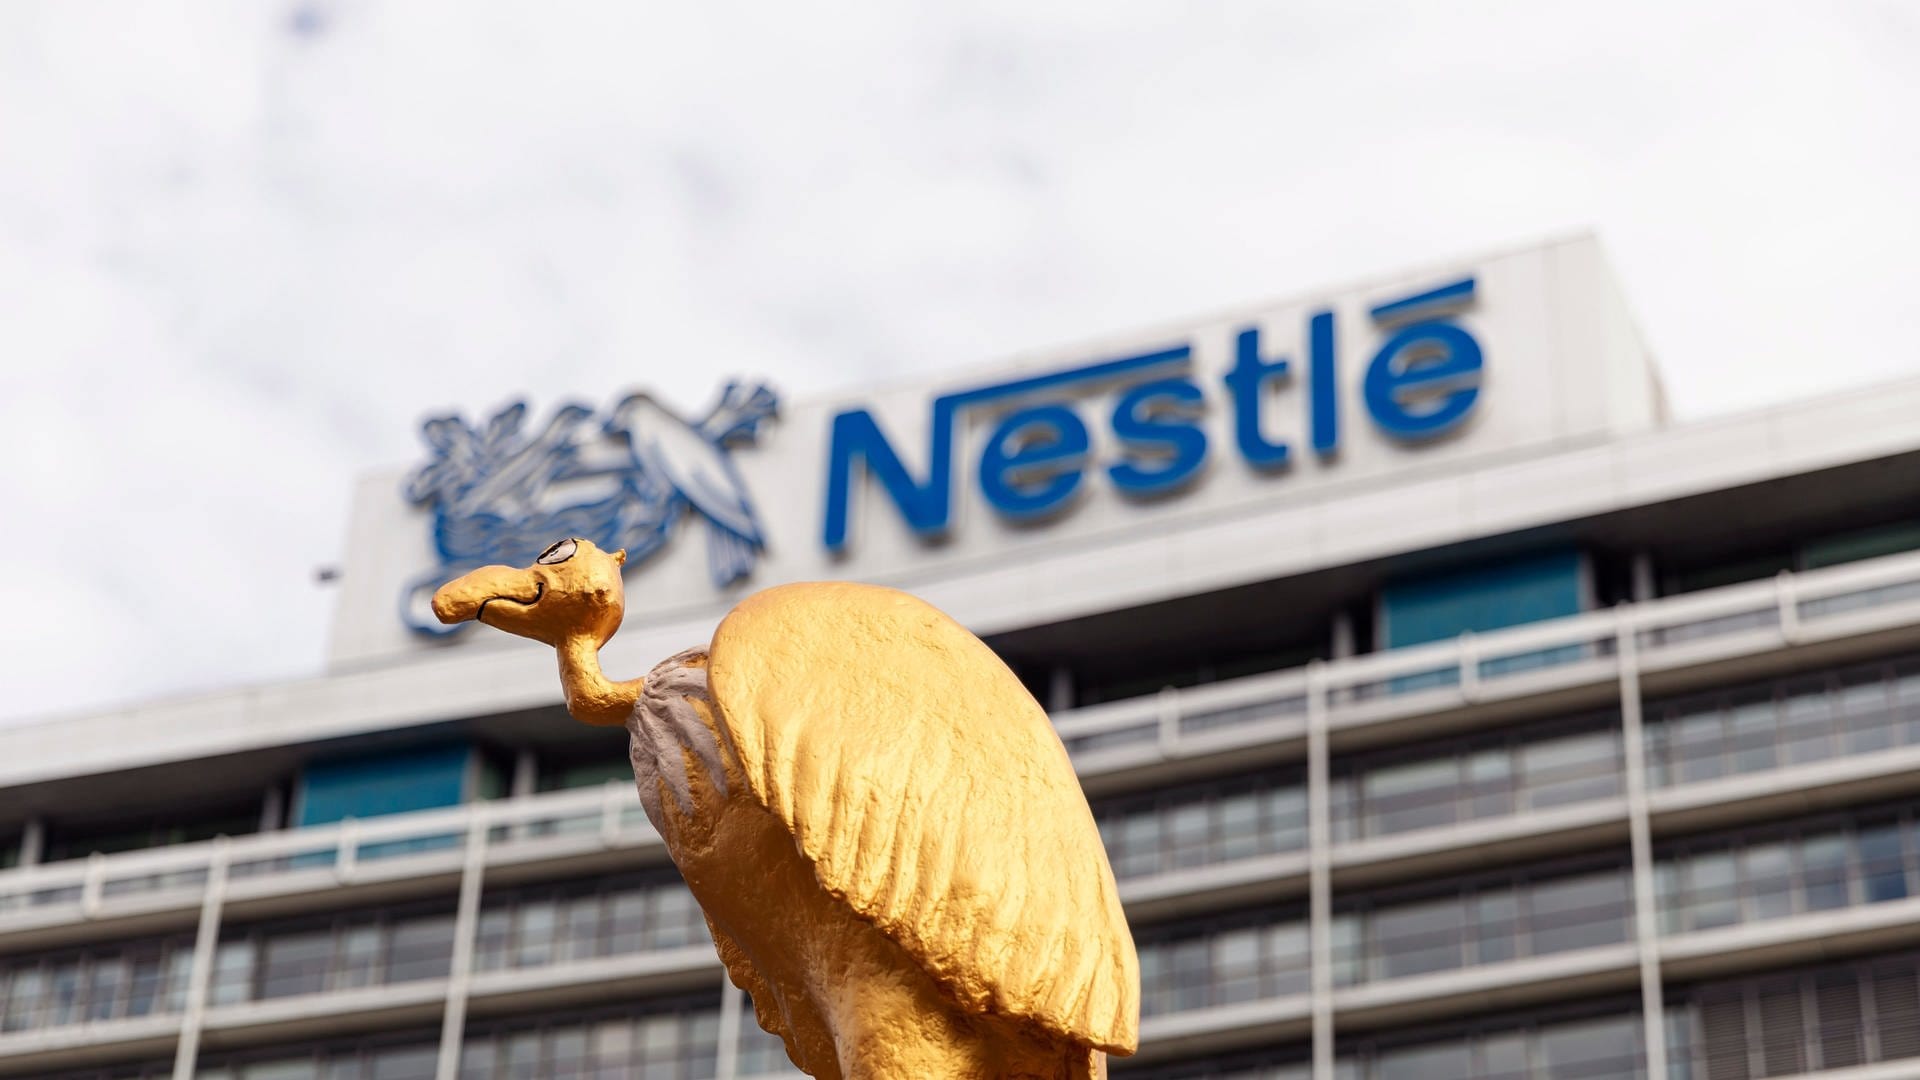 Goldener Geier für dreisteste Umweltlüge geht an Nestlé